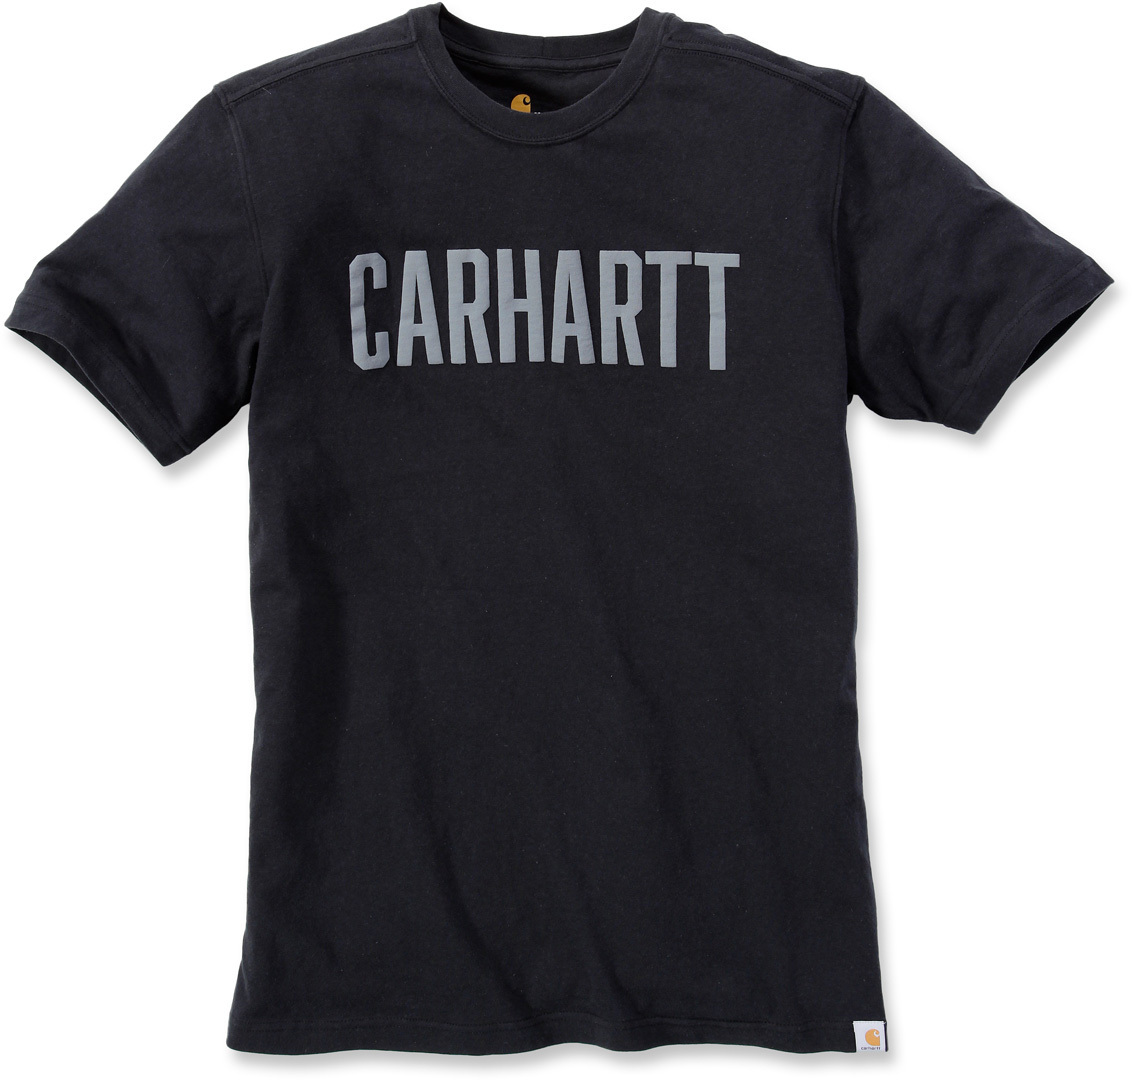 Image of Carhartt Maddock Graphic Block T-shirt, nero, dimensione 2XL